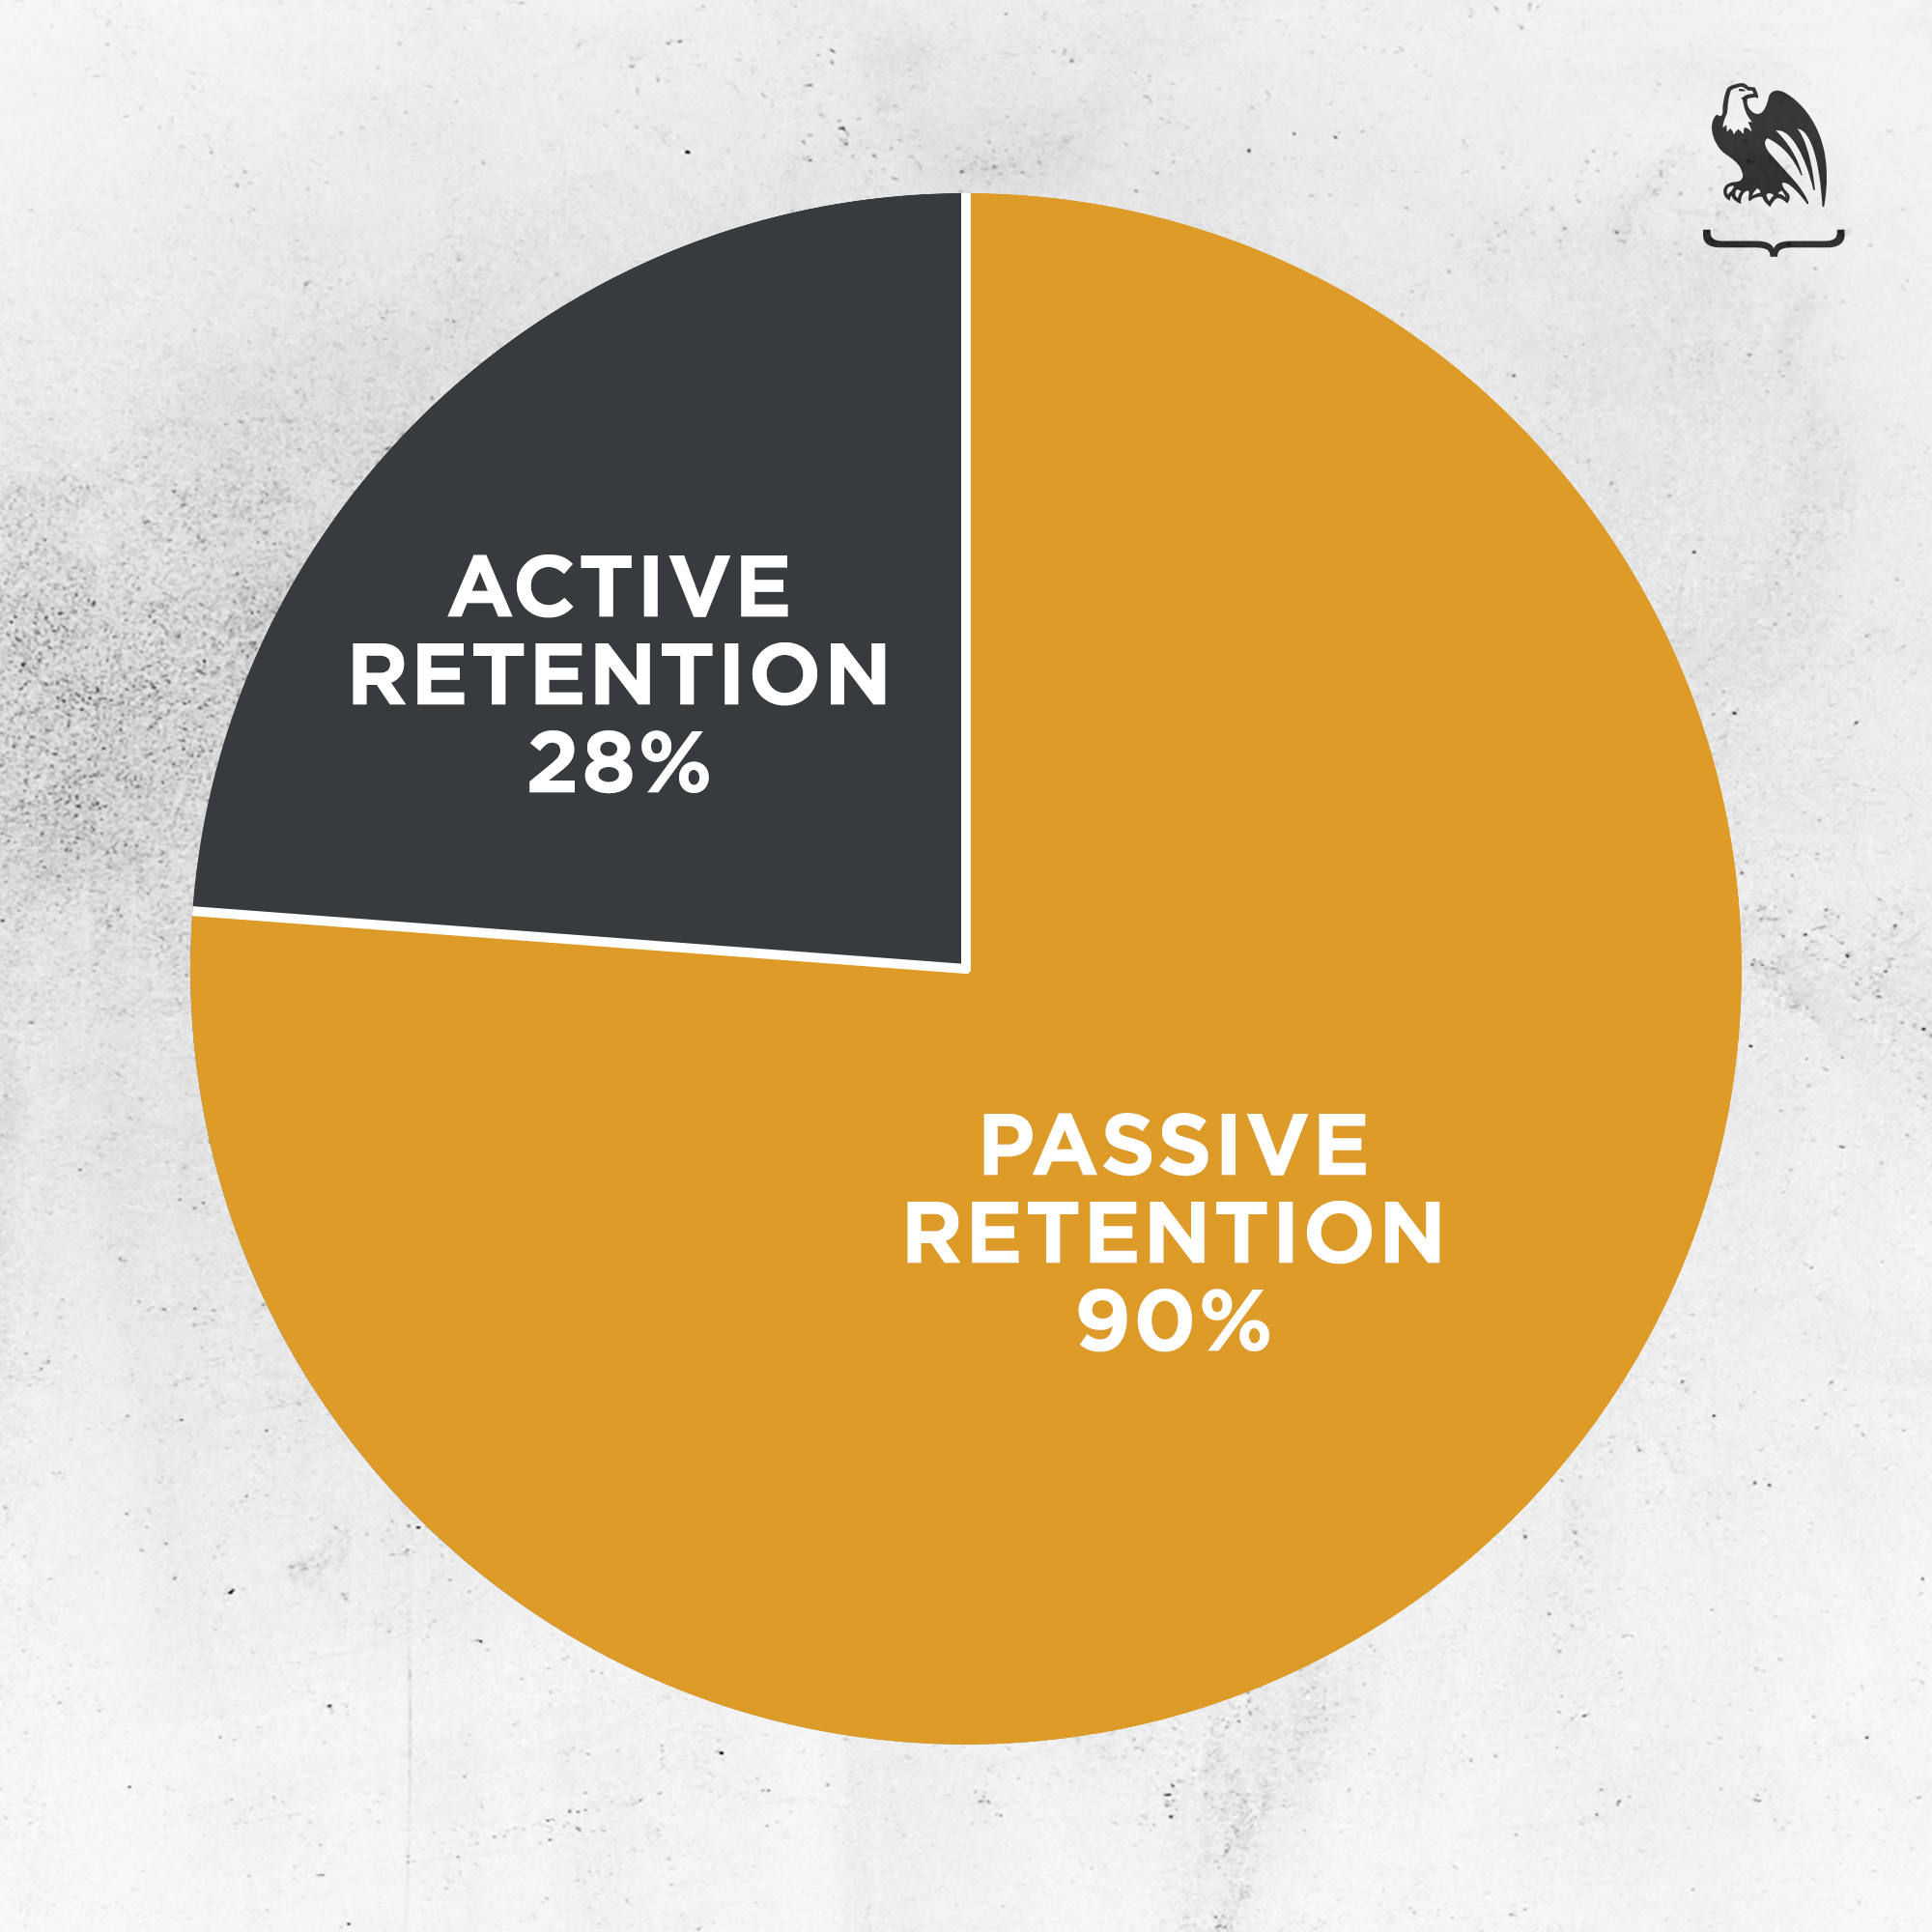 Retention - Active and Passive Retention